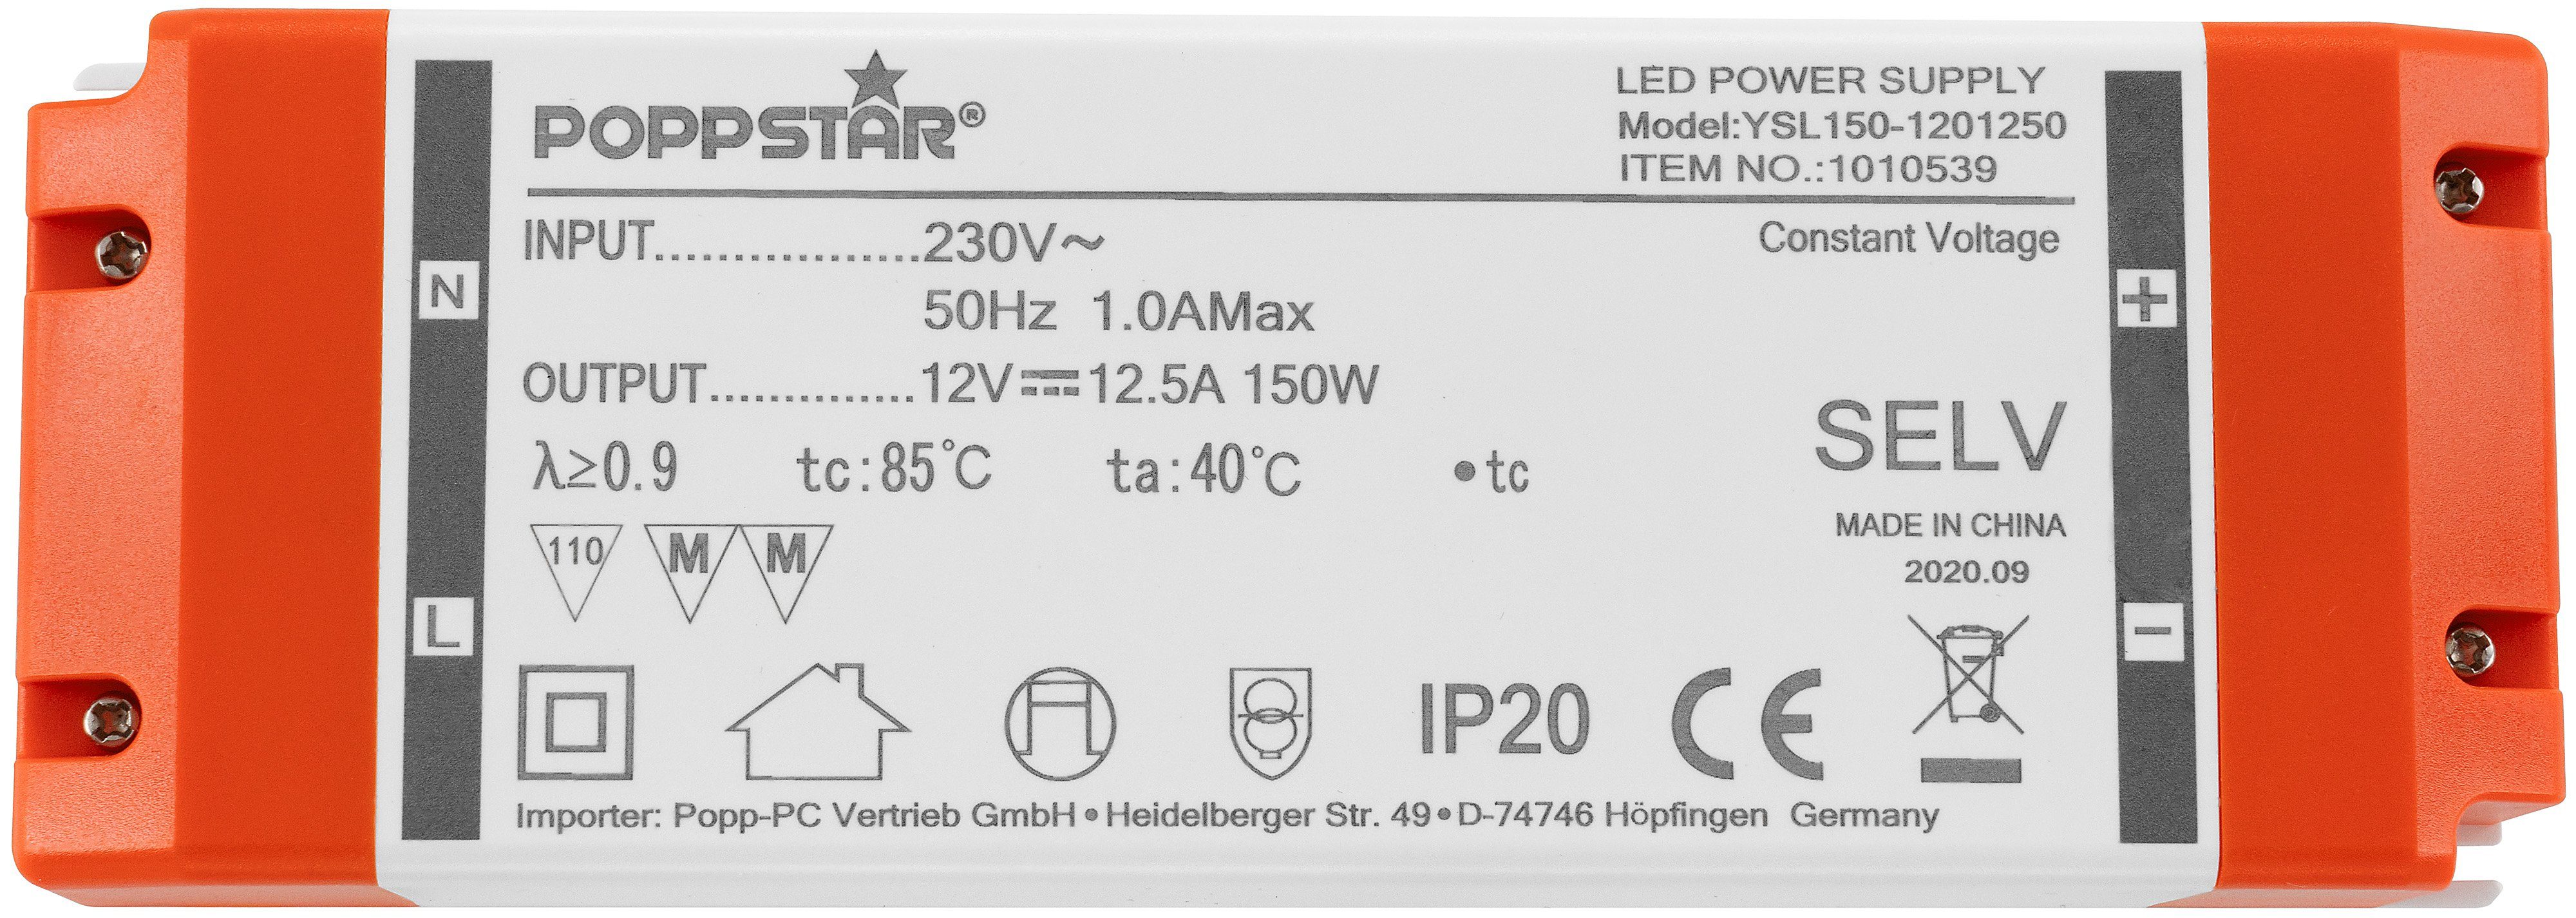 Watt AC LEDs) / DC bis W 150 (12V 230V LED LED 12,5A Trafo Trafo für Poppstar Transformator 1,5 12V